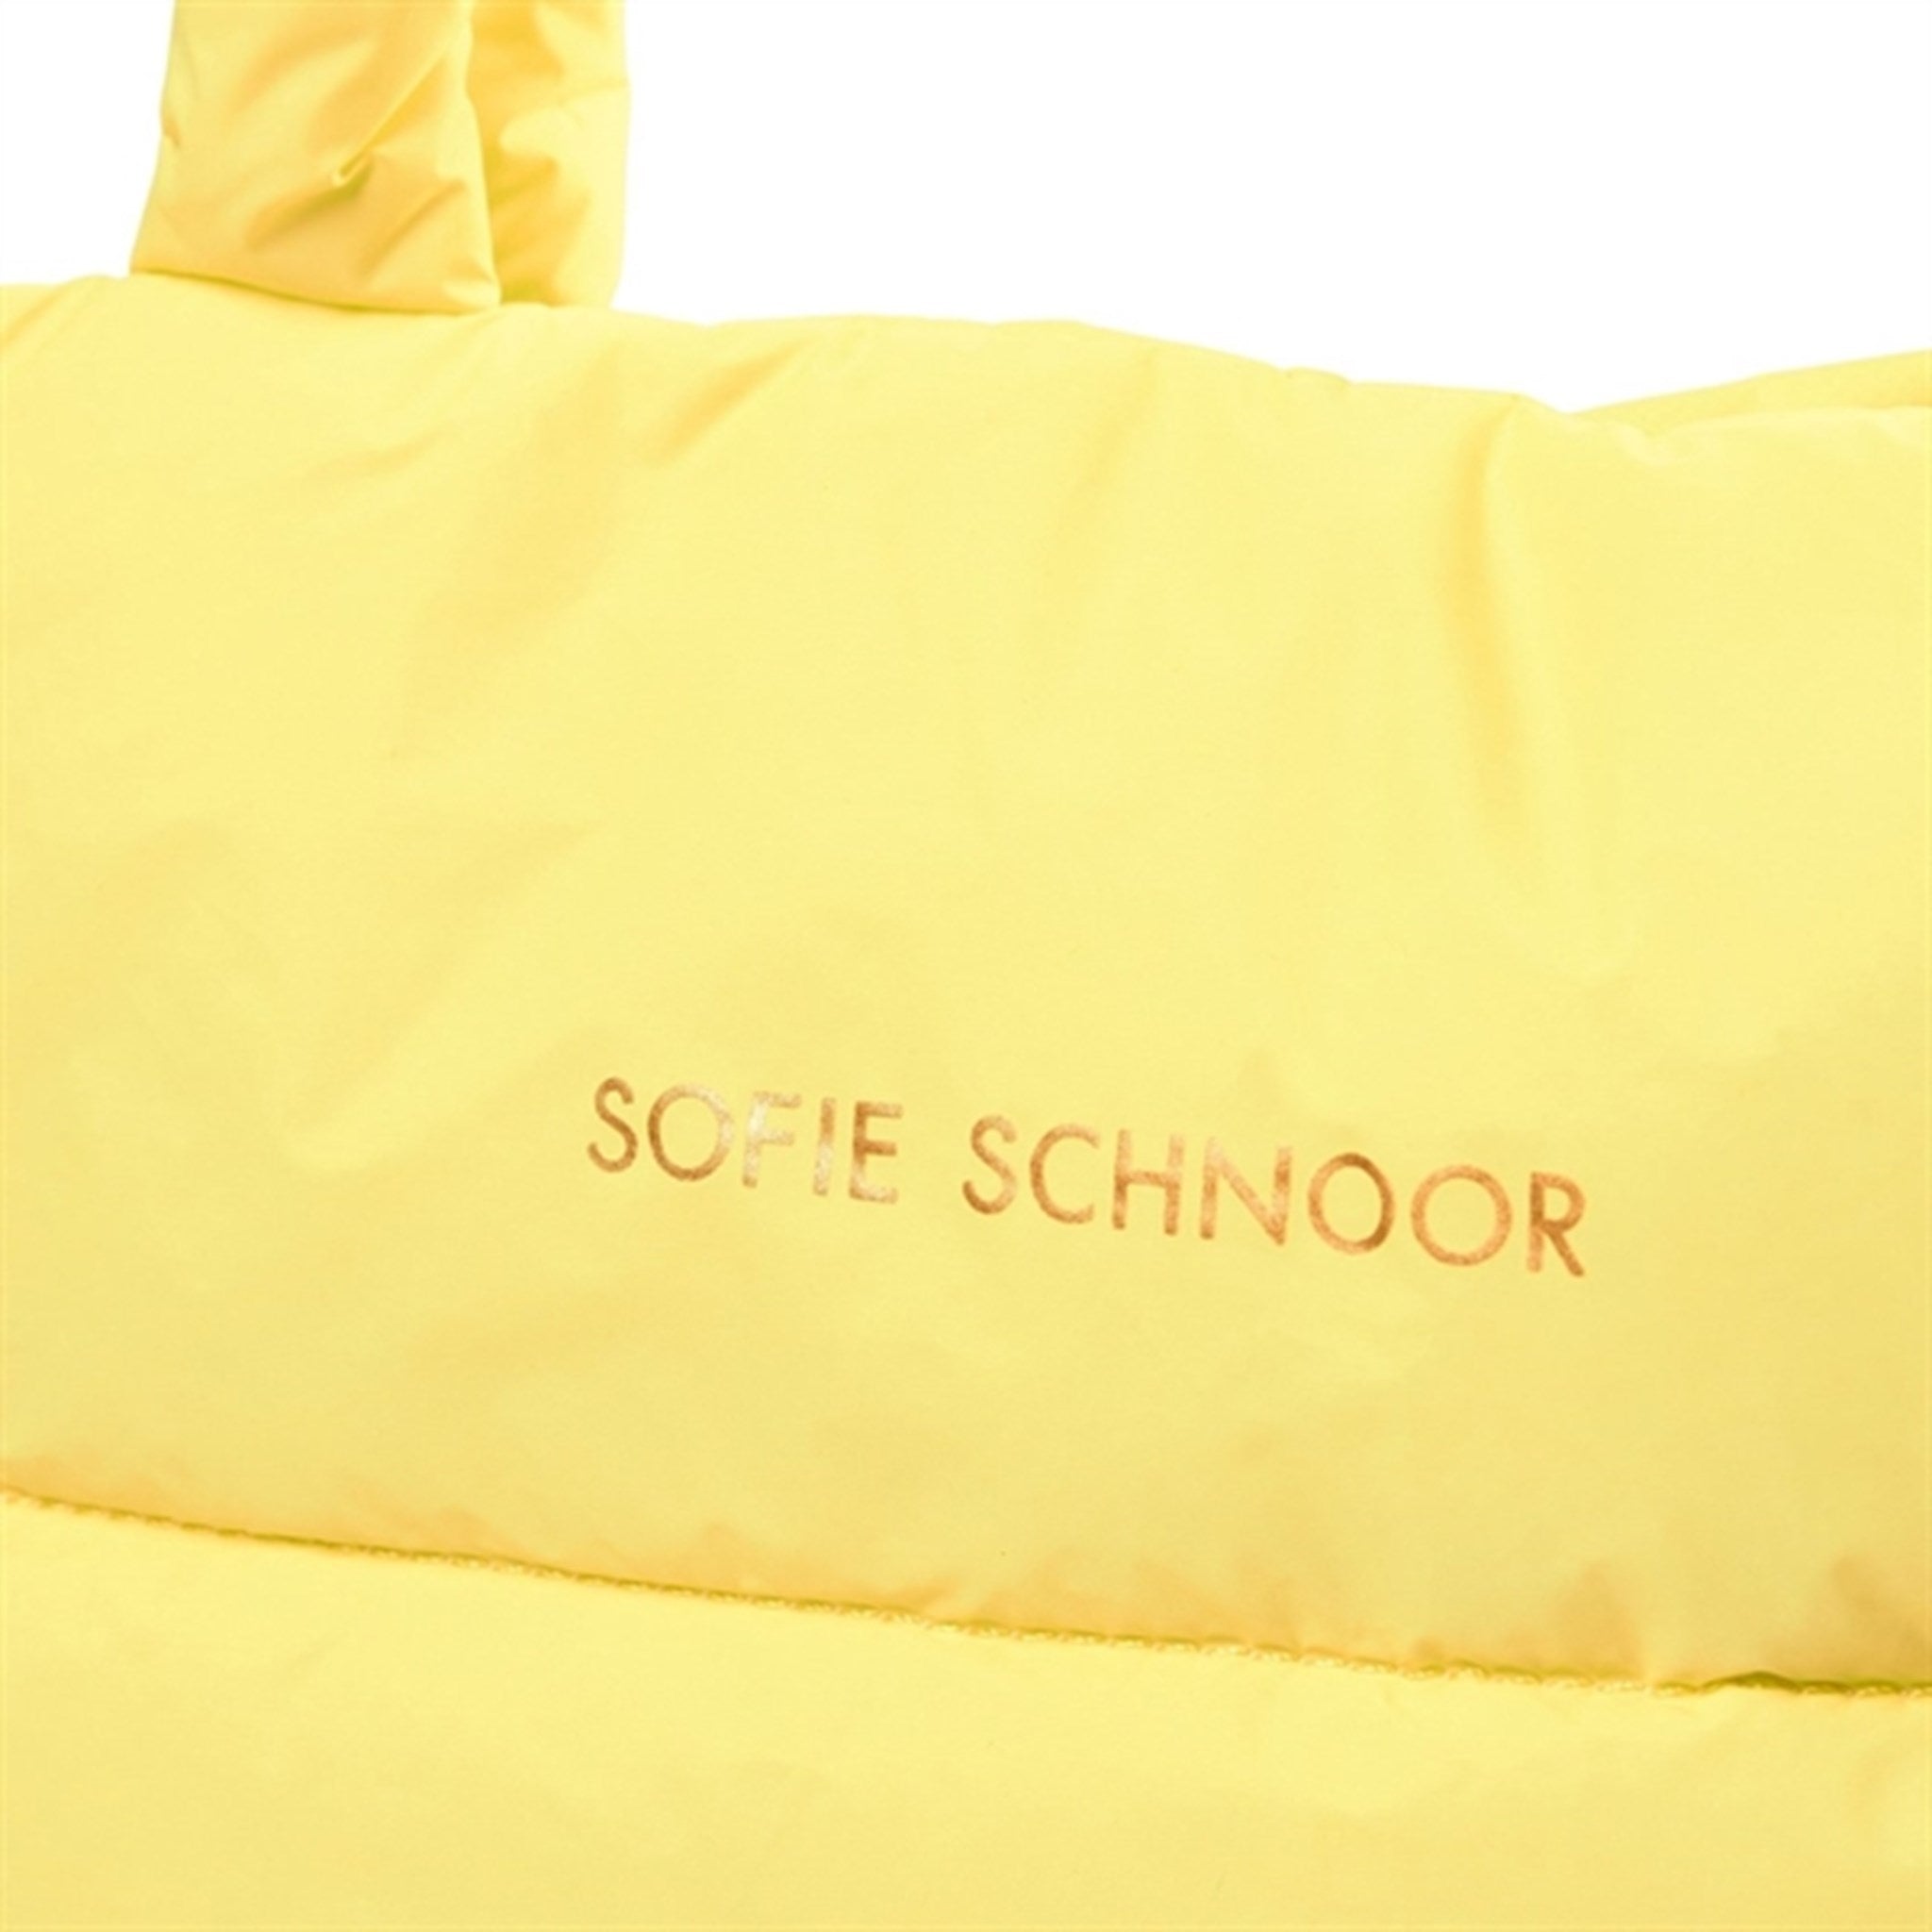 Sofie Schnoor Totebag Light yellow 2